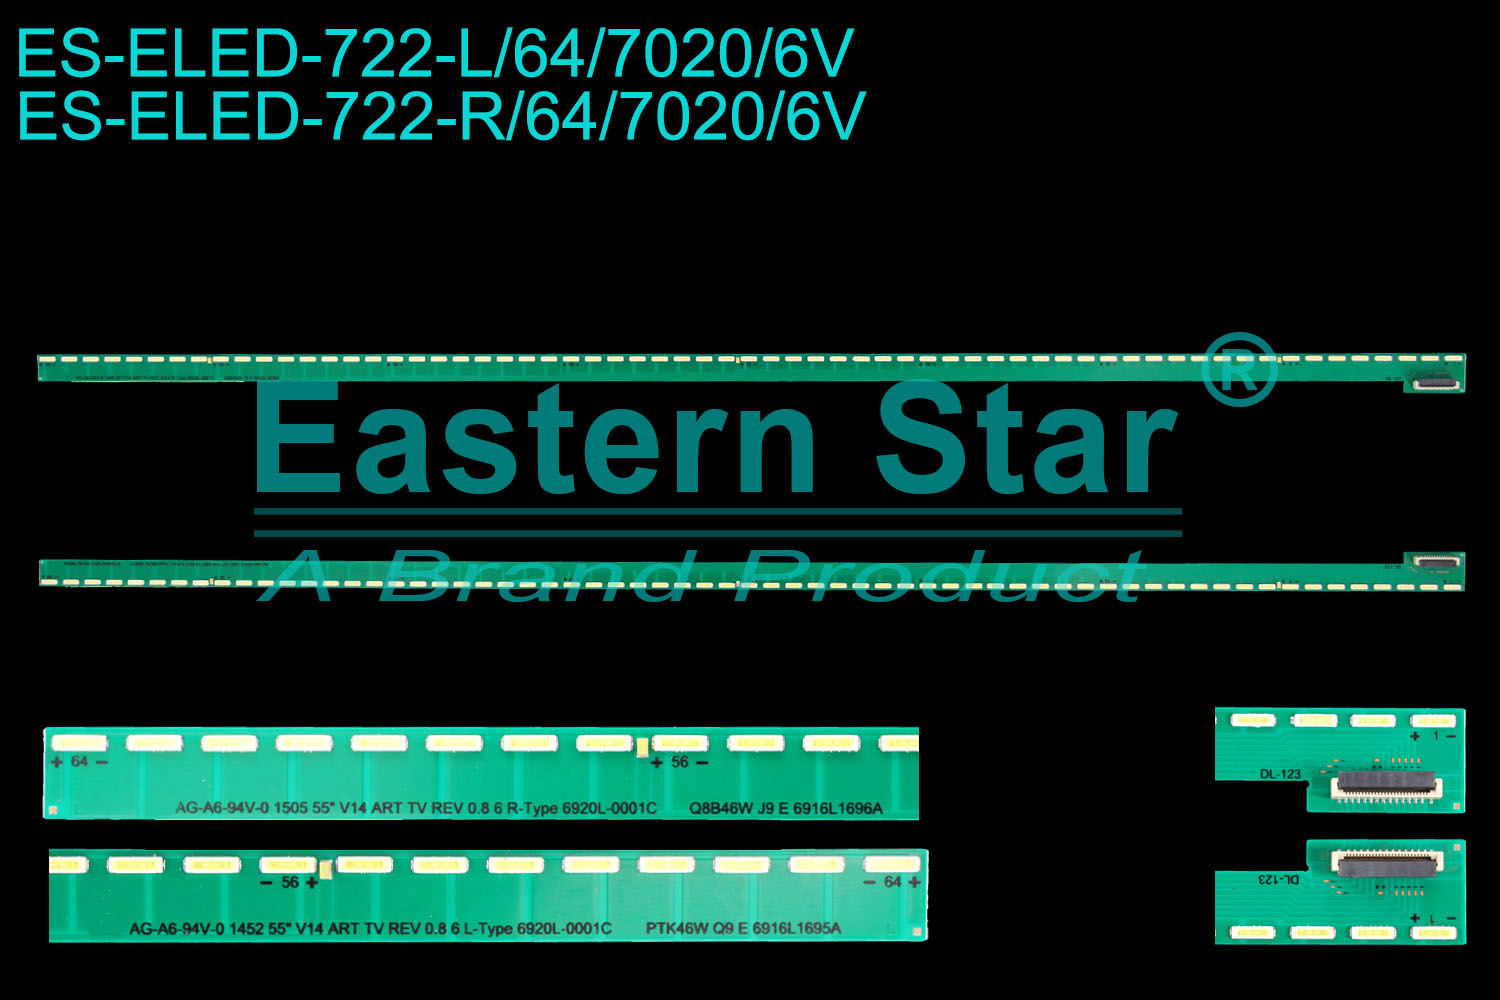 ES-ELED-722 ELED/EDGE TV backlight use for 55'' Sony  KDL-55W950B L:55"V14 ART TV REV0.8 6 L-Type 6920L-0001C PTK46W Q9 E 6916L1695A  R:55"V14 ART TV REV0.8 6 R-Type 6920L-0001C Q8B46W J9 E 6916L1696A  LED STRIPS(2)